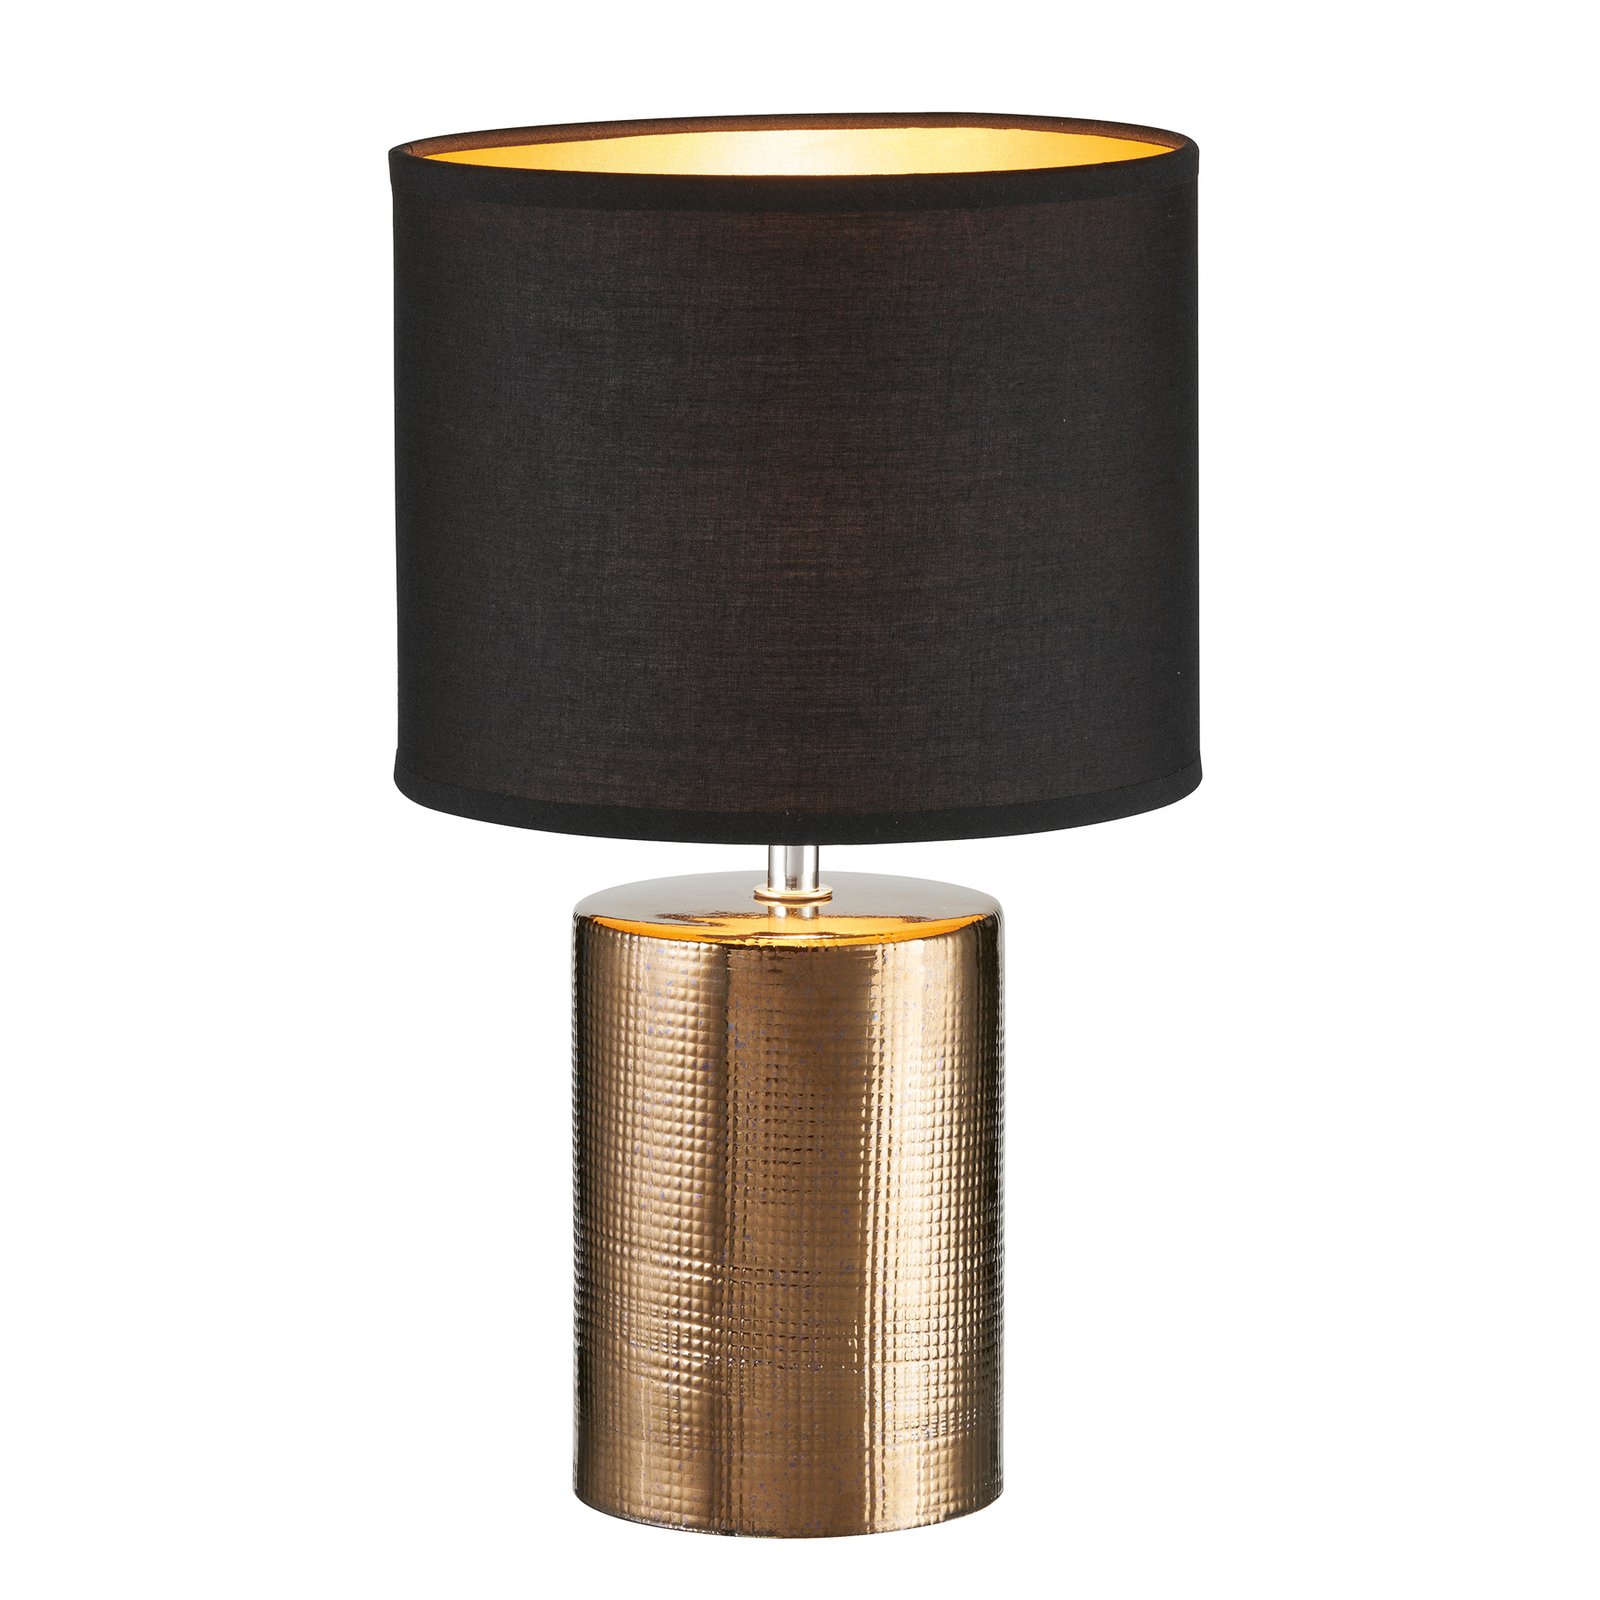 Bronz table lamp, cylindrical, black/bronze